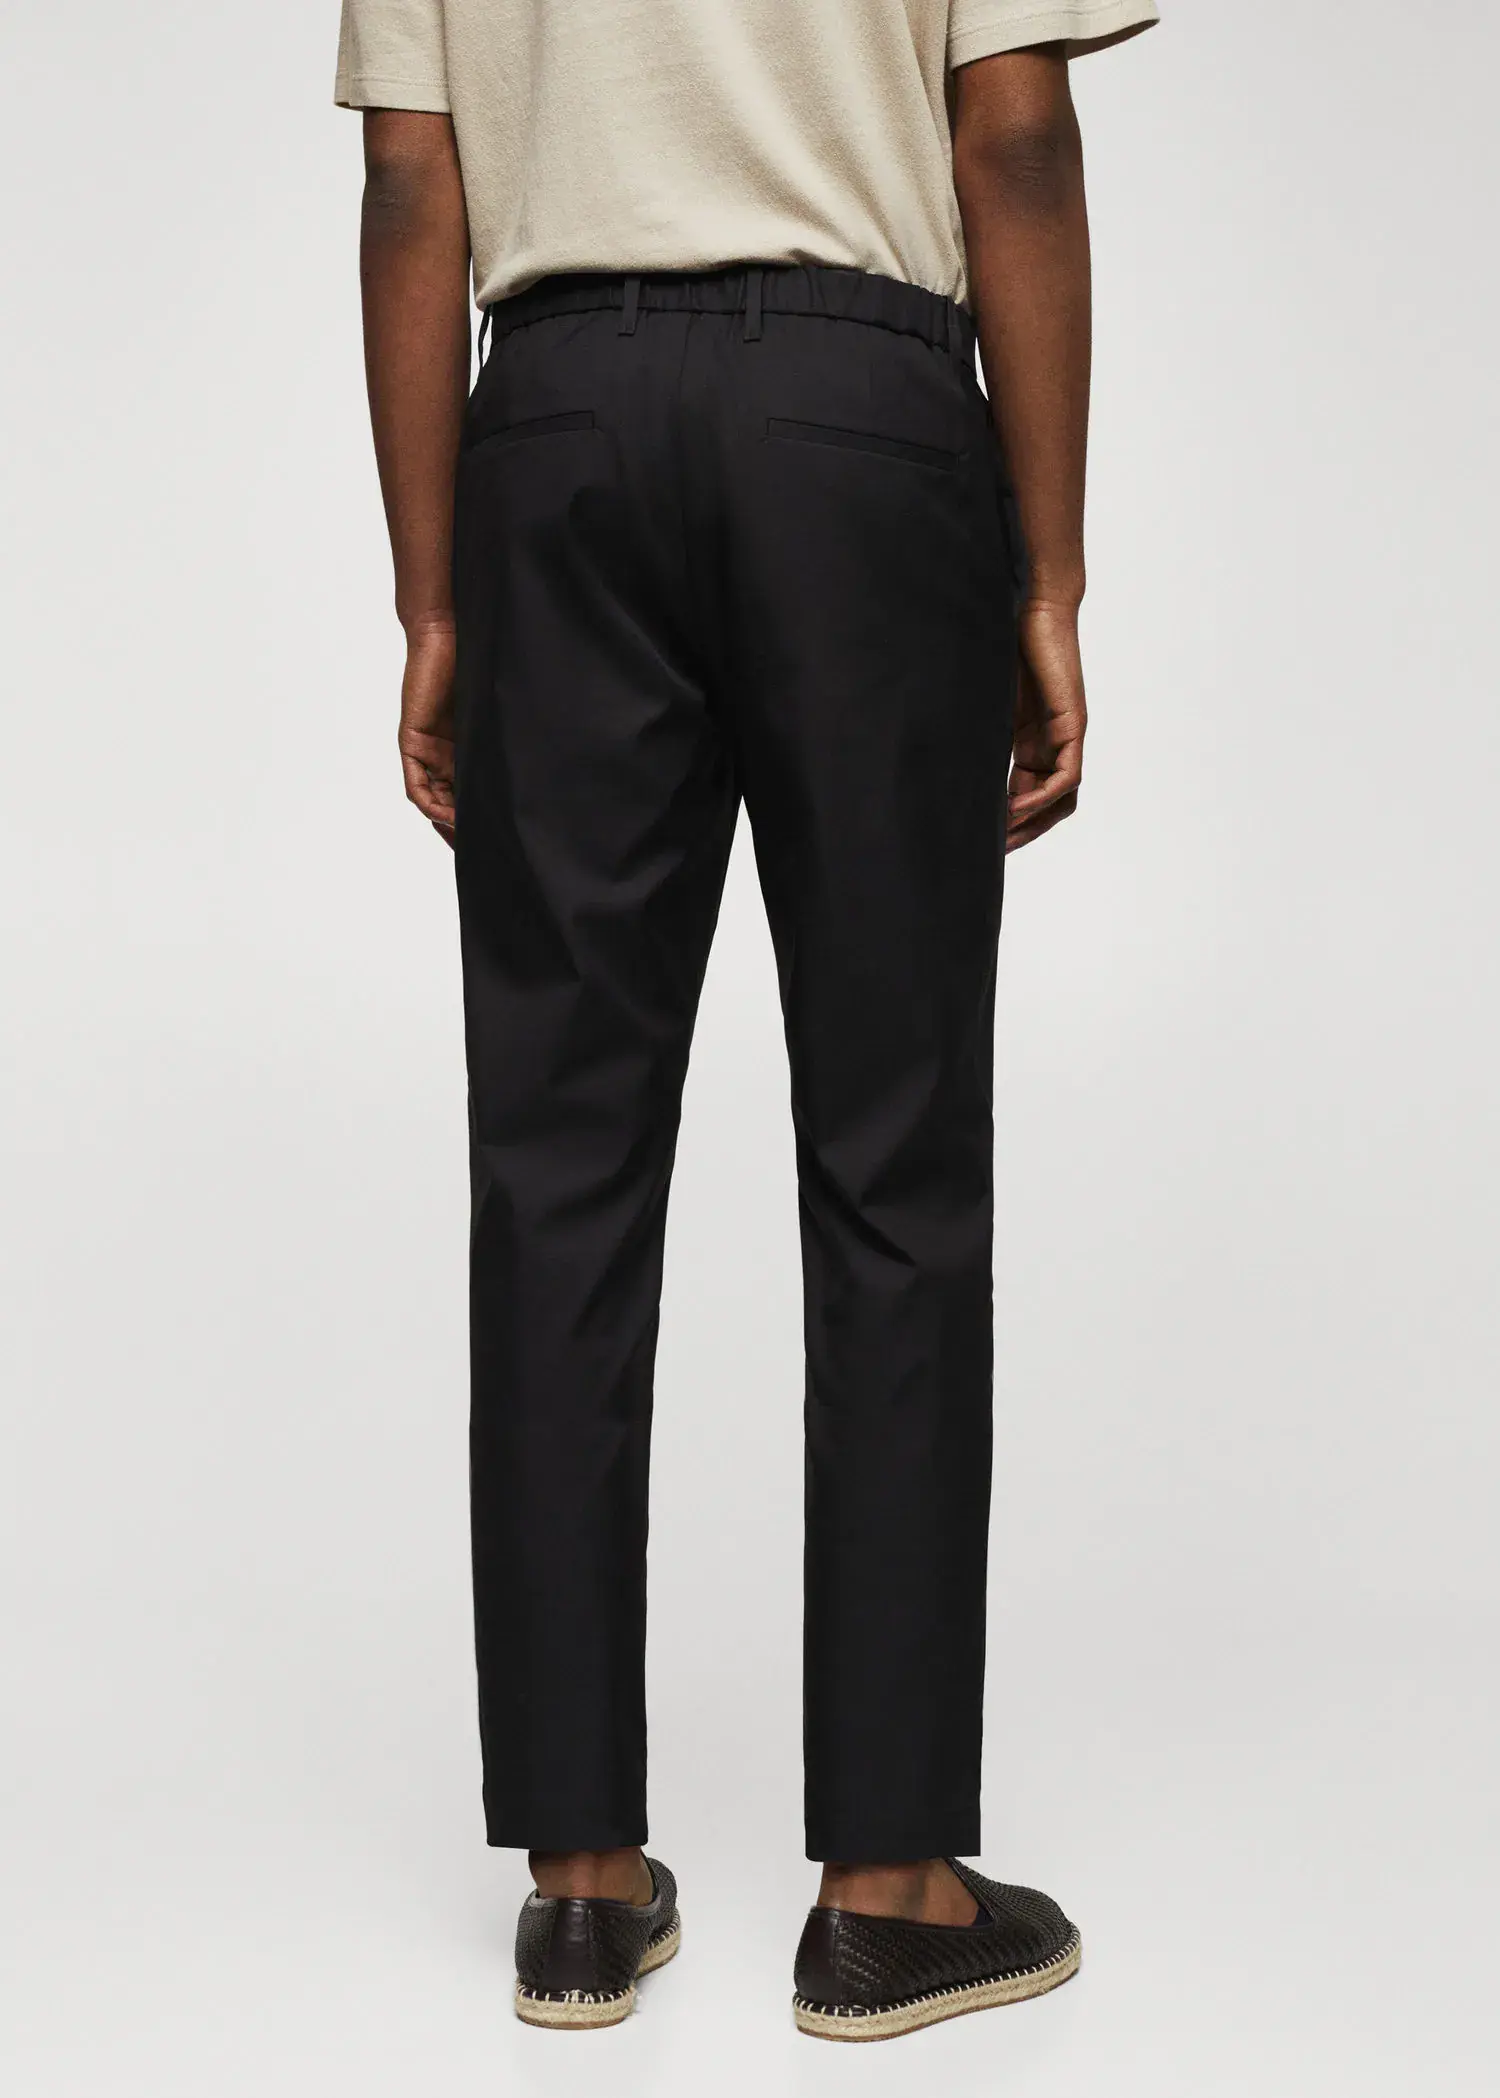 Mango Slim-fit cotton pants. a person wearing black pants and a white shirt. 